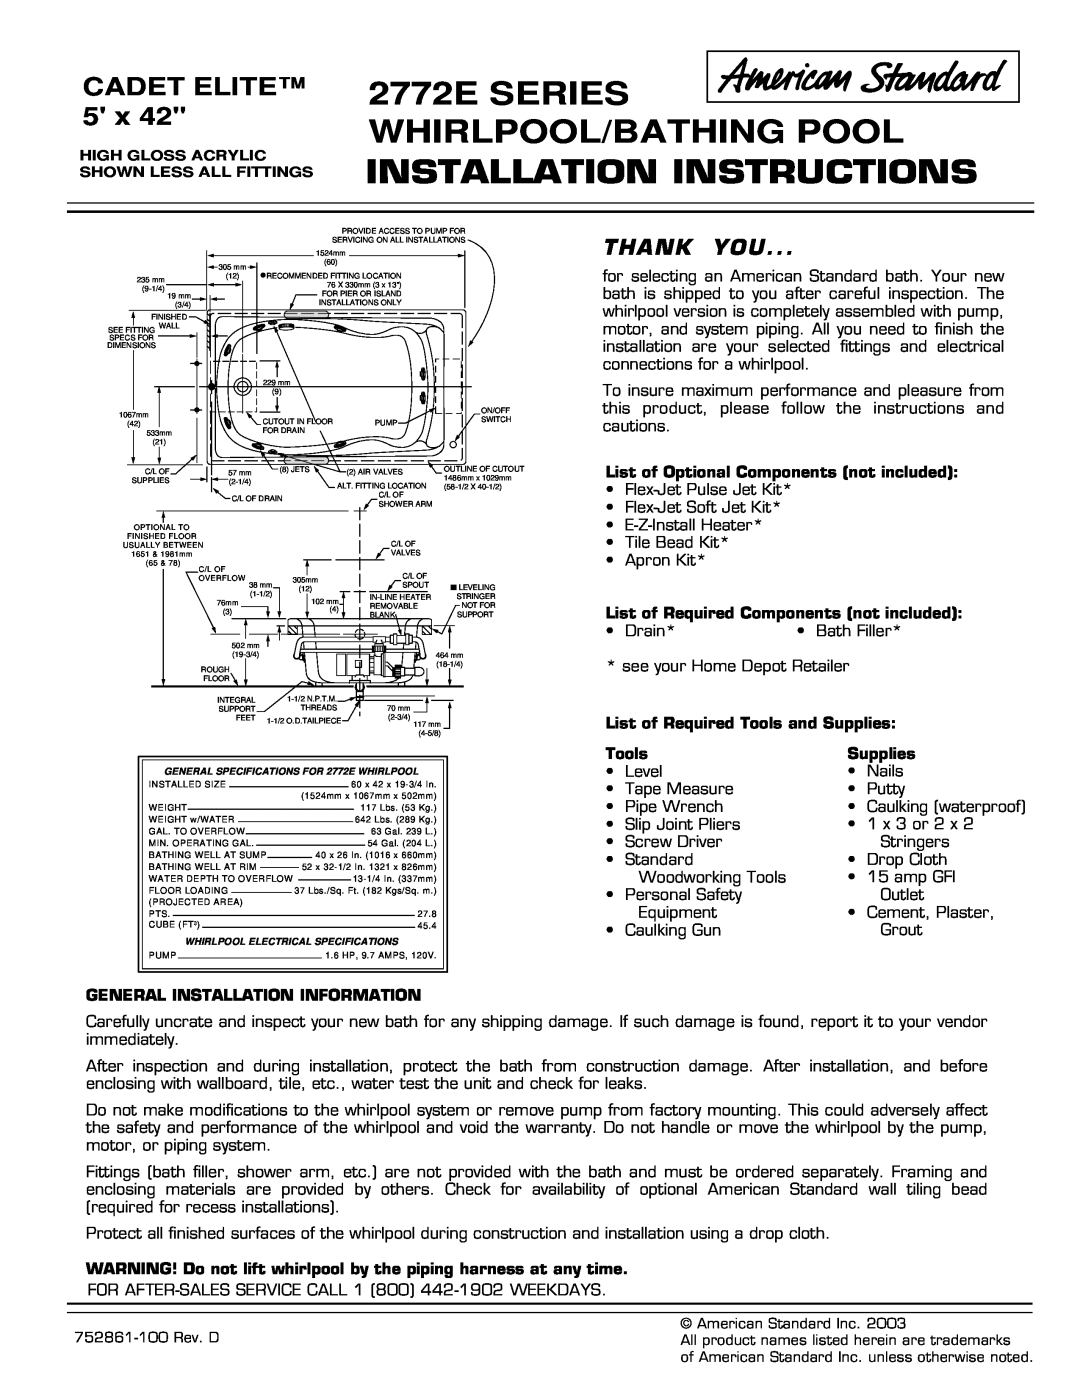 American Standard installation instructions 2772E SERIES WHIRLPOOL/BATHING POOL, Installation Instructions, Cadet Elite 